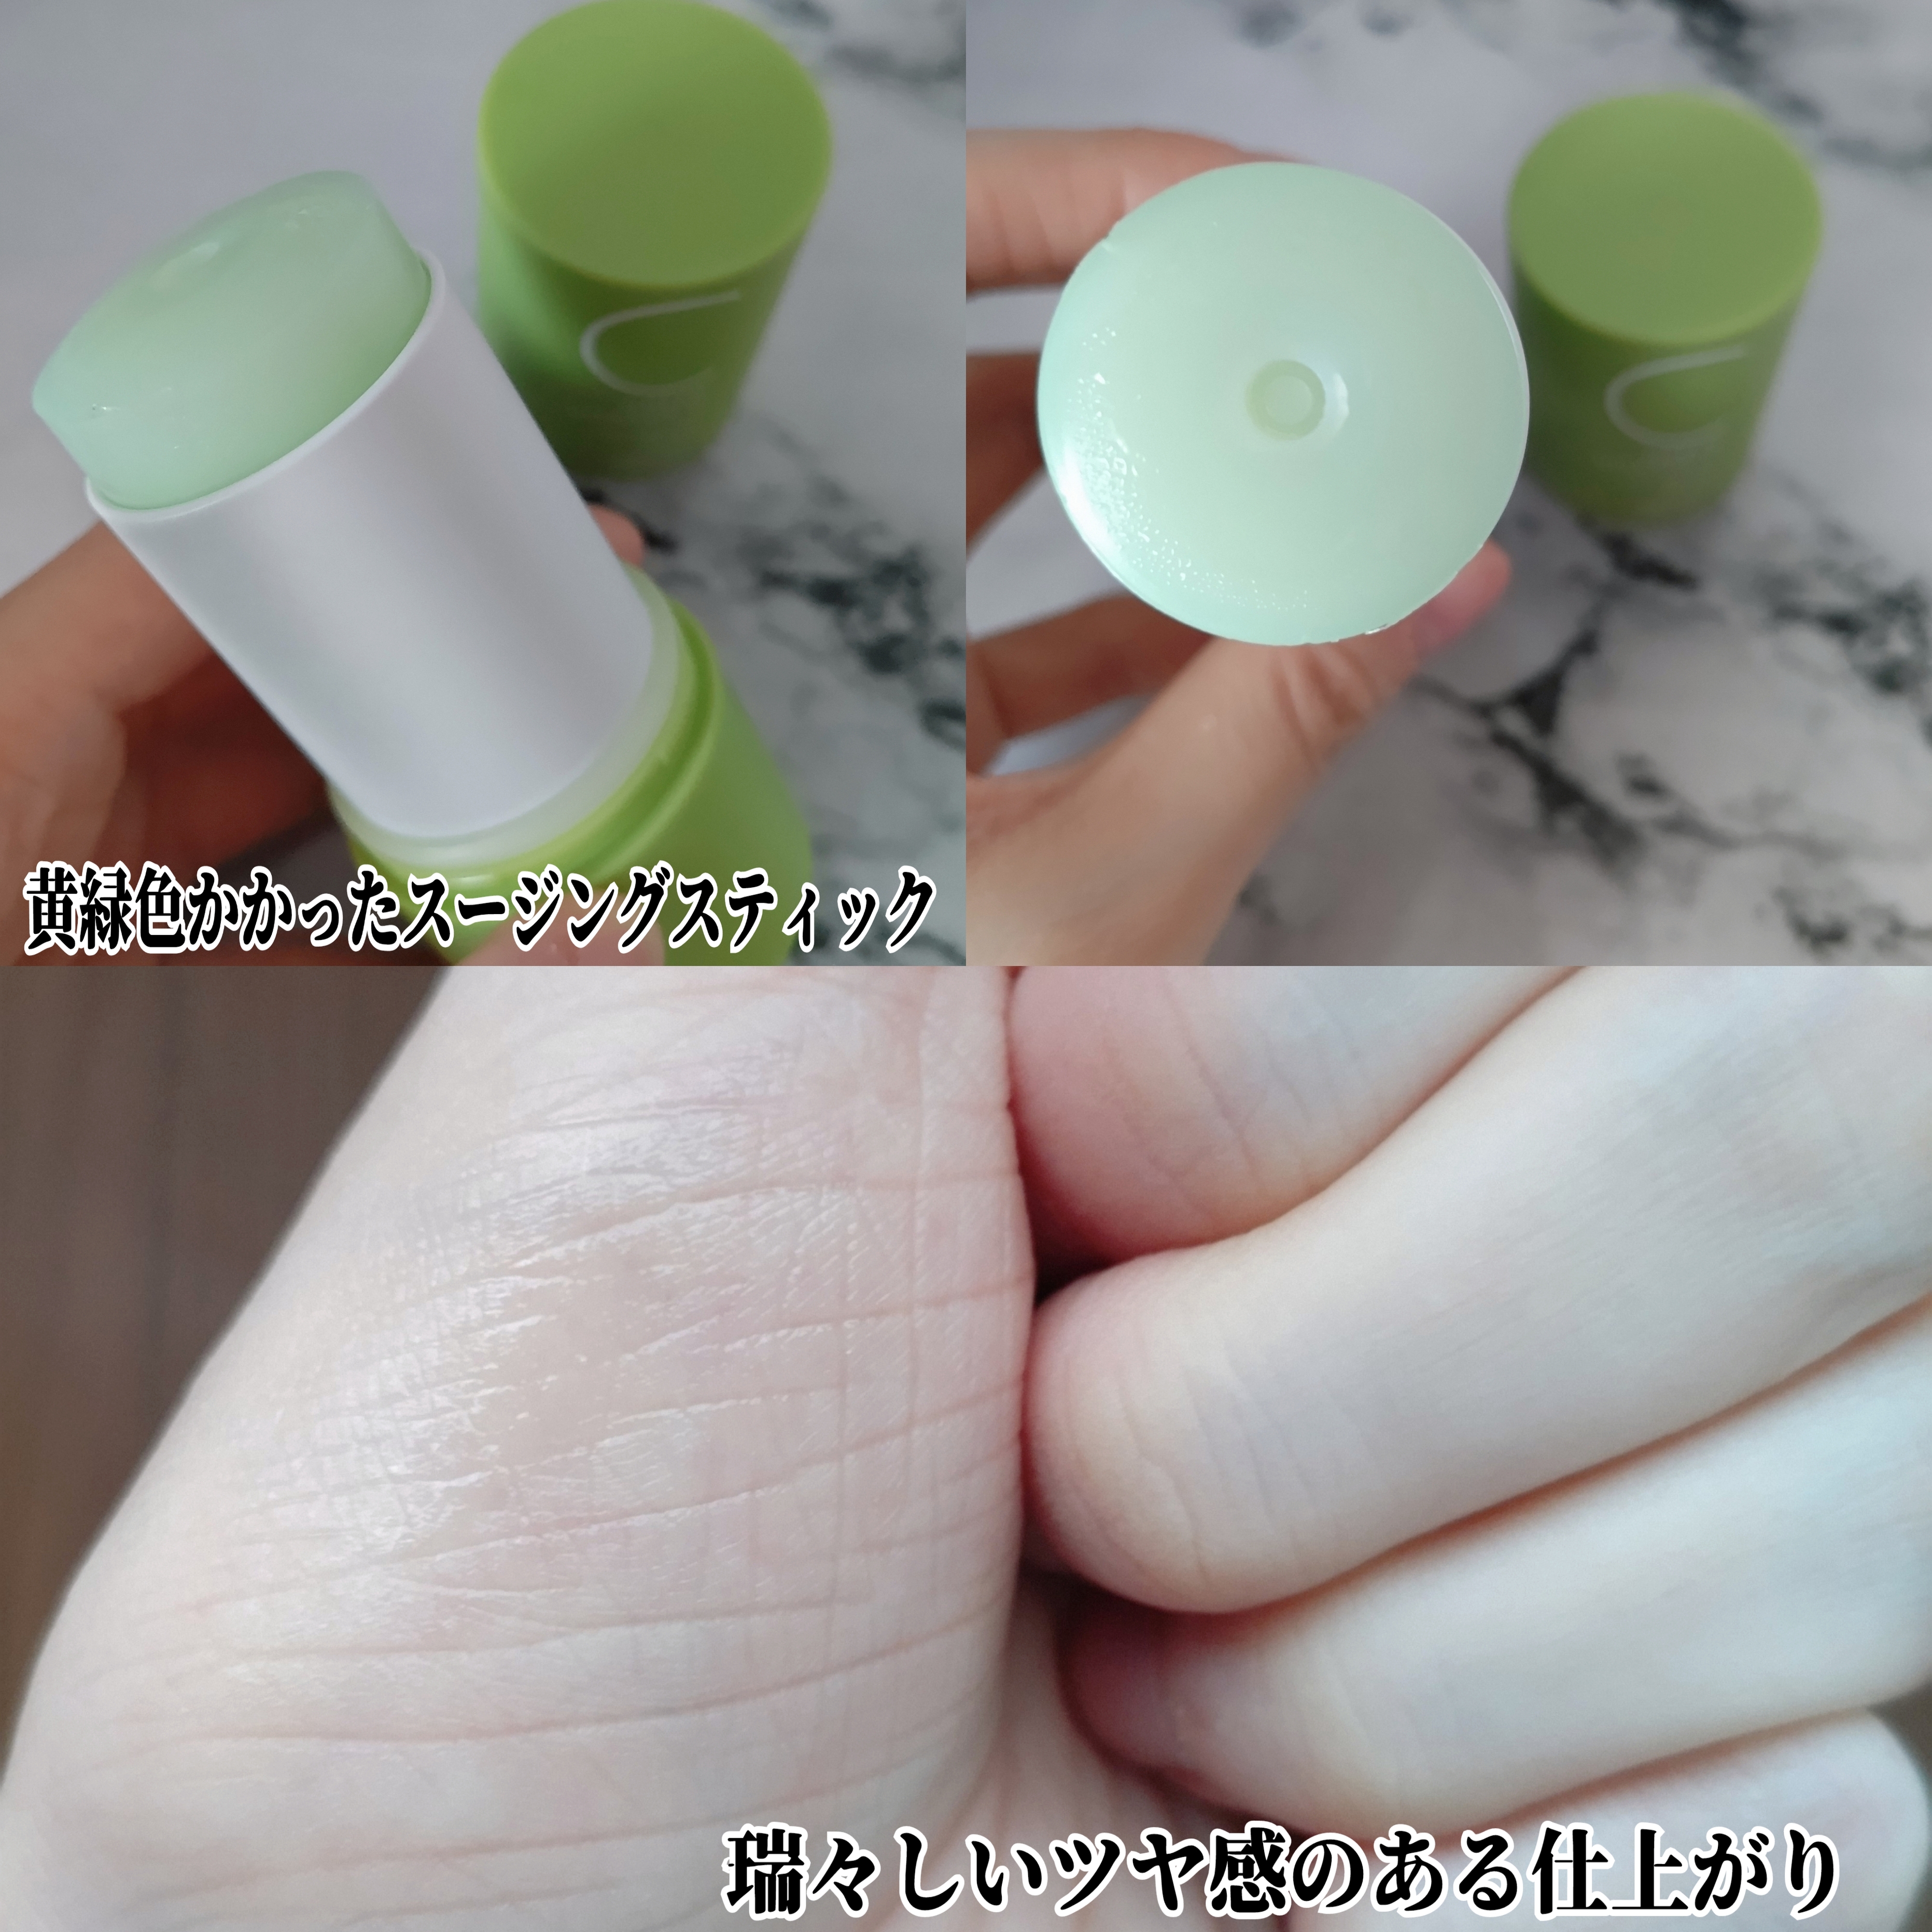 Ariul Green Vitamin C Soothing stickを使ったYuKaRi♡さんのクチコミ画像4